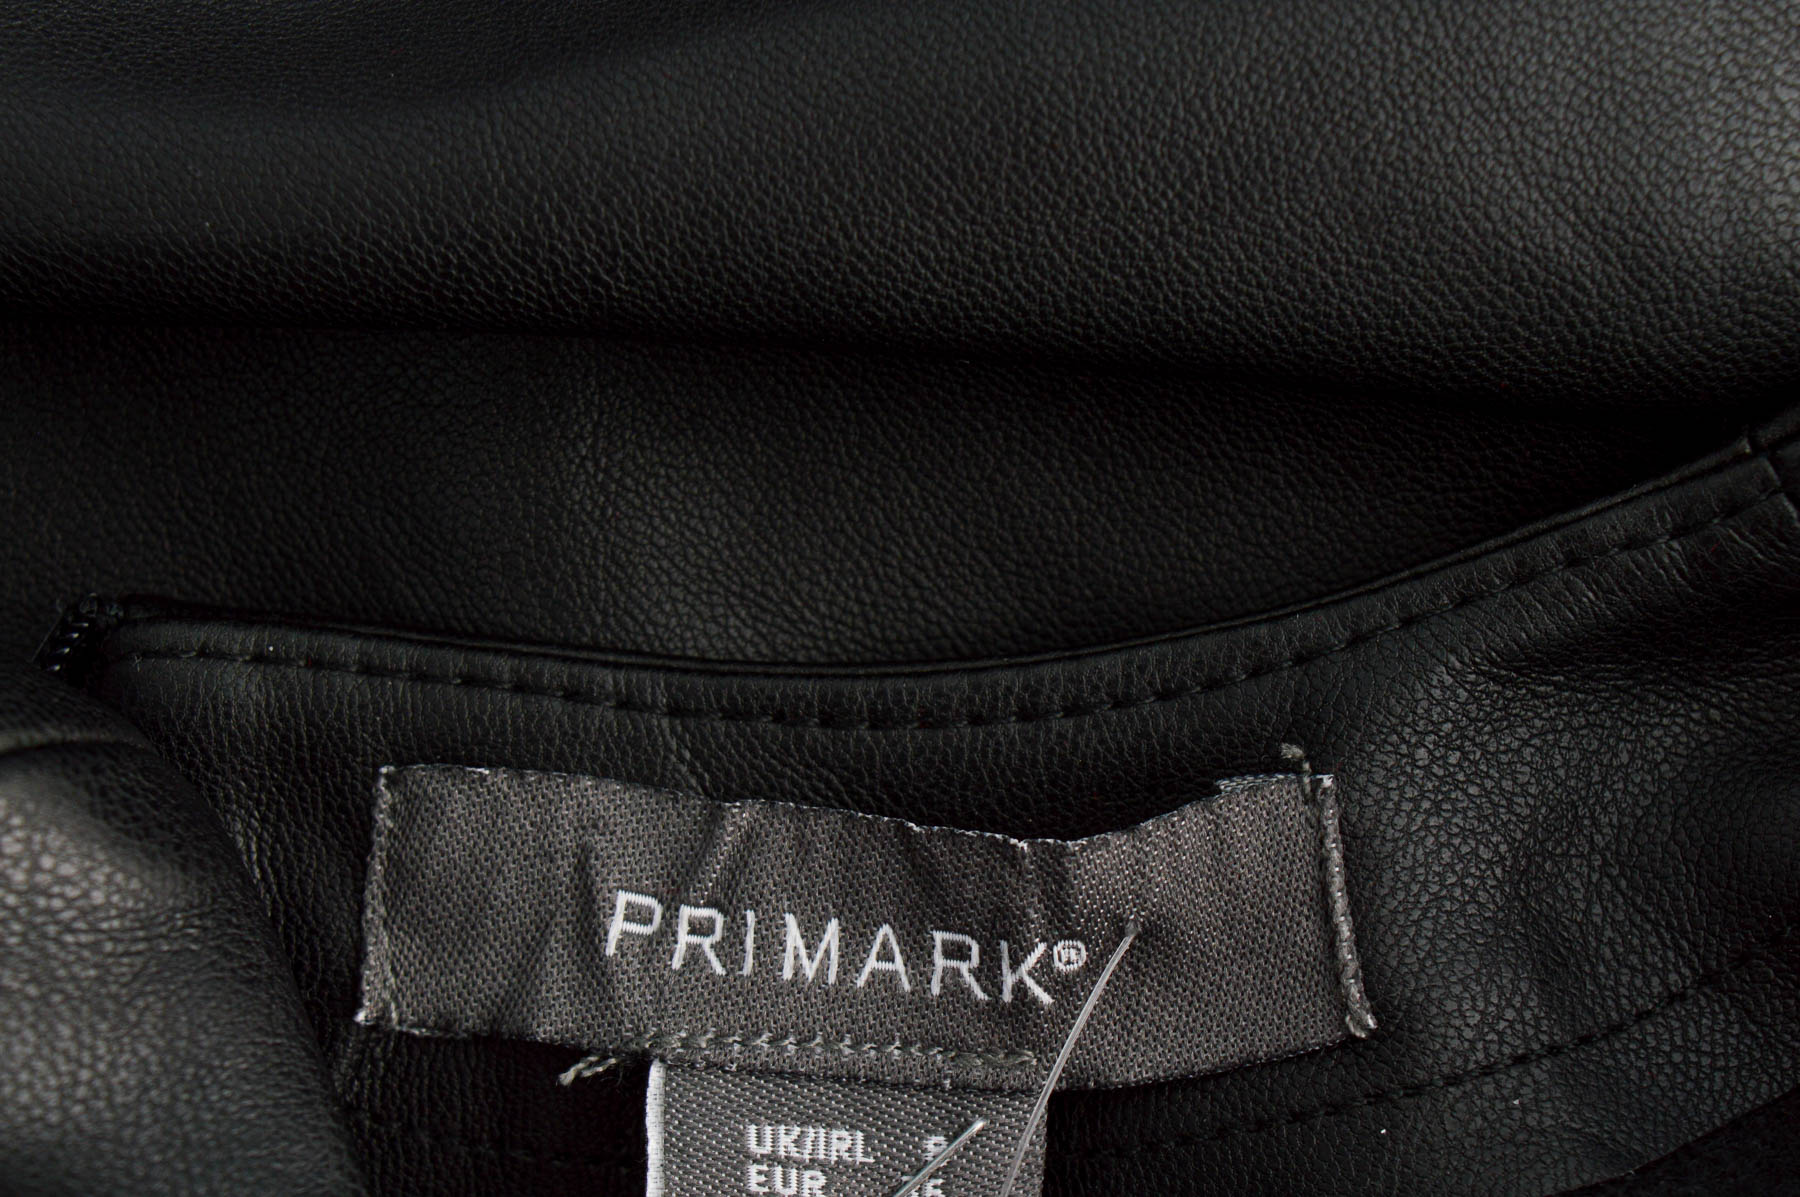 Leather dress - PRIMARK - 2